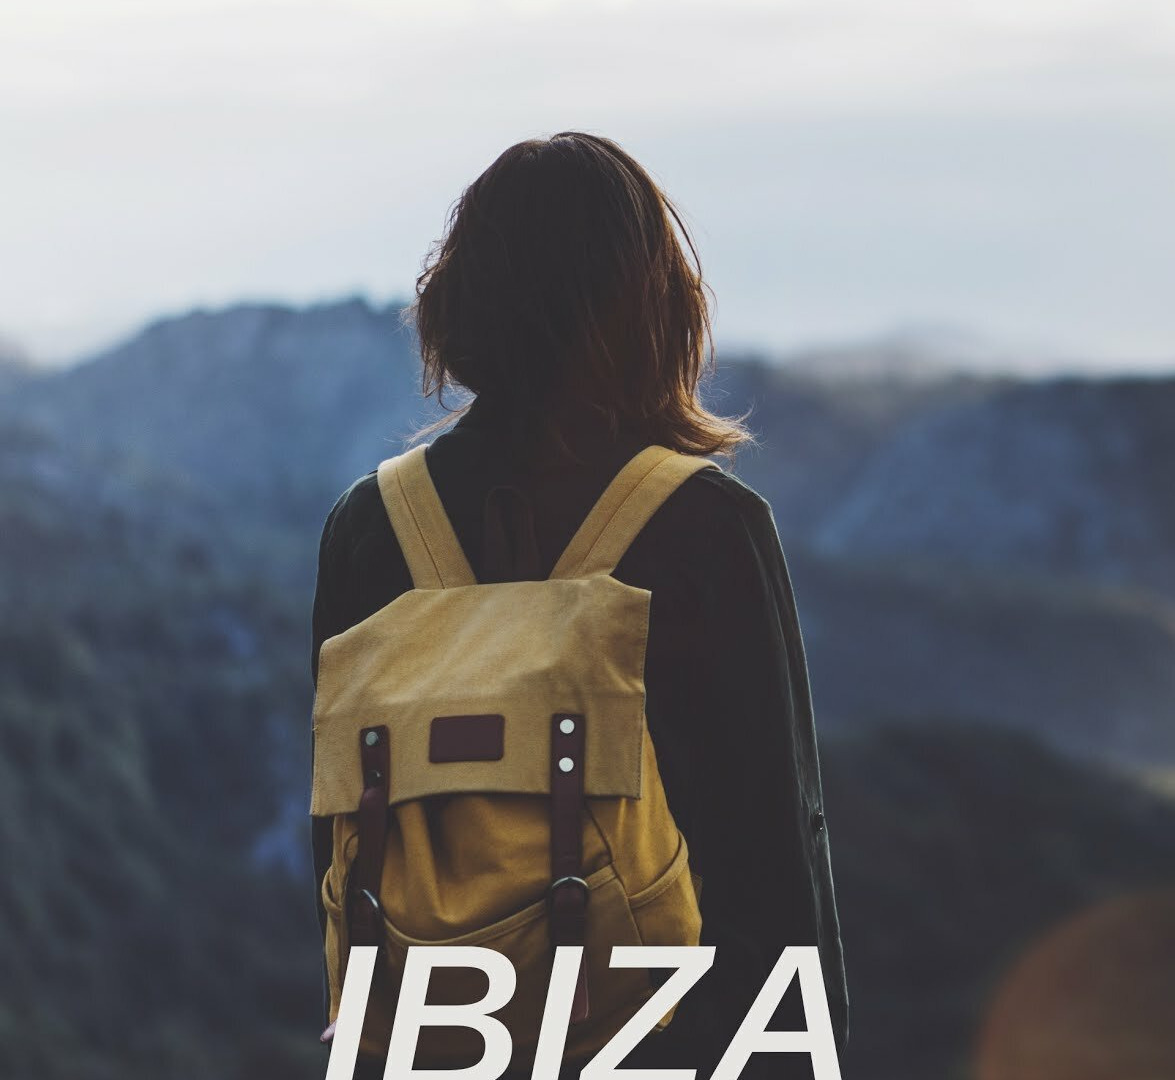 Show Ibiza: Secrets of the Party Island